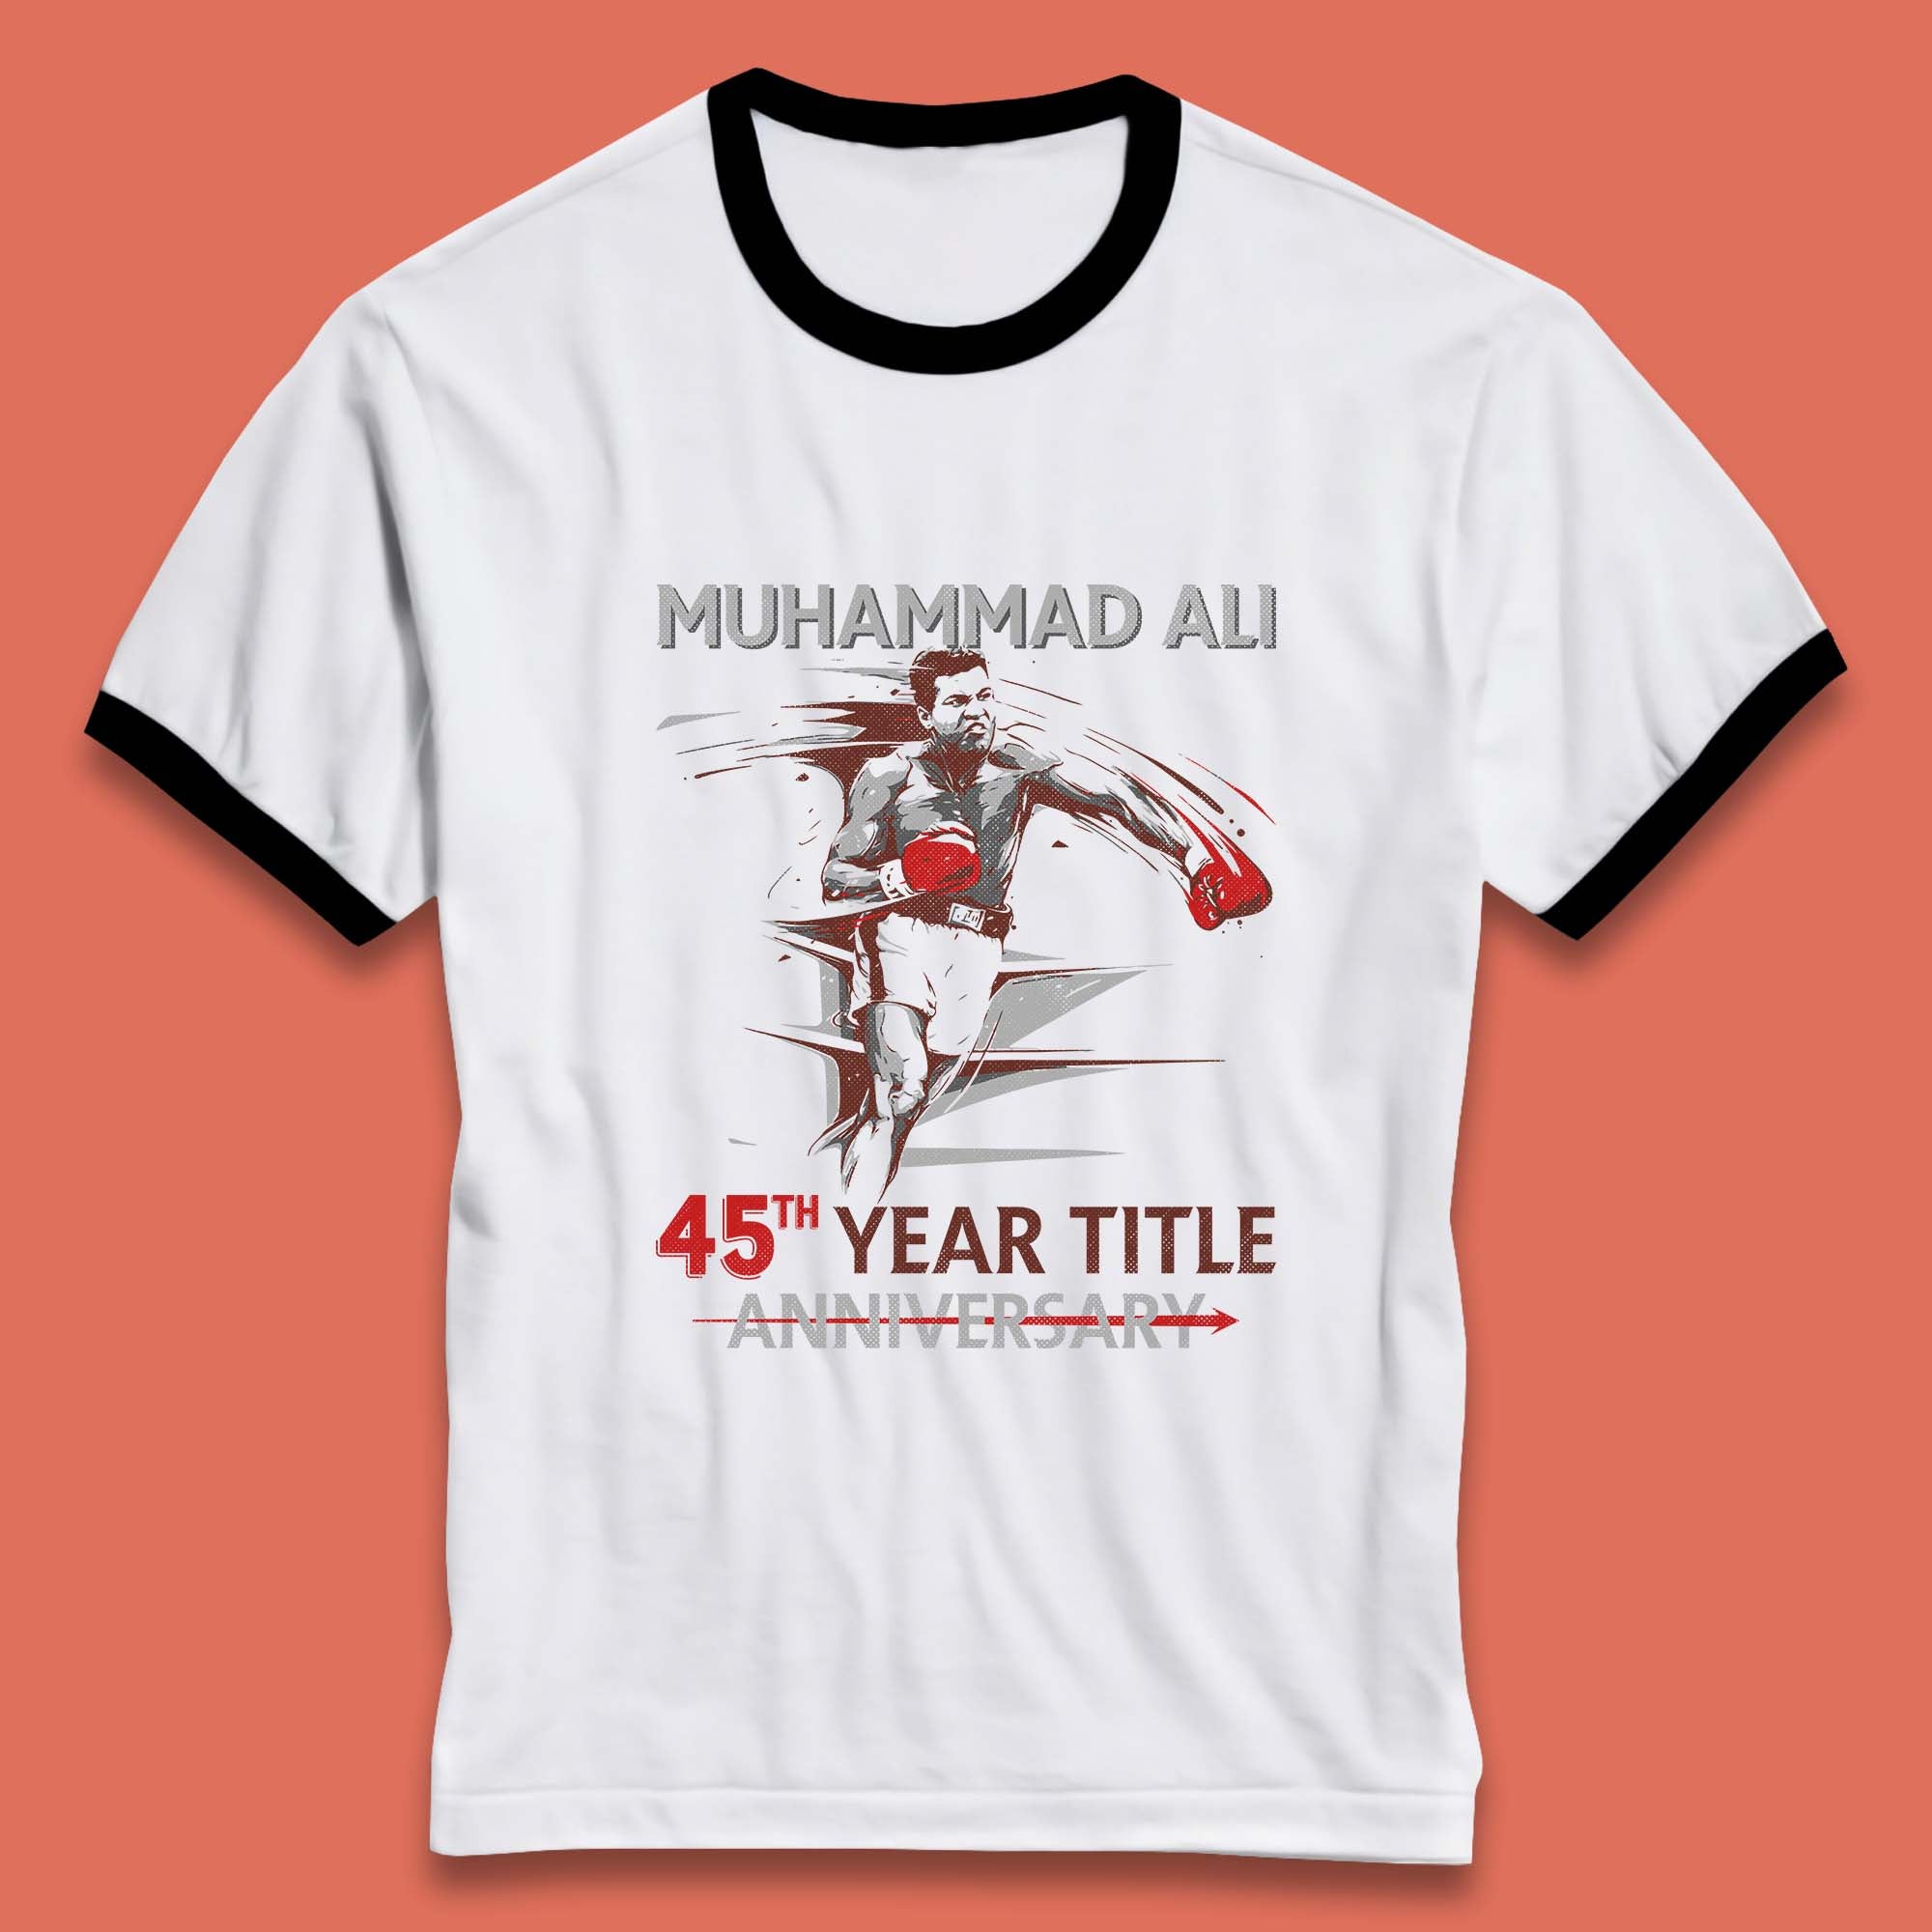 Muhammad Ali 45th Year Title Anniversary World Boxing Champion American Heavyweight Boxer Ringer T Shirt